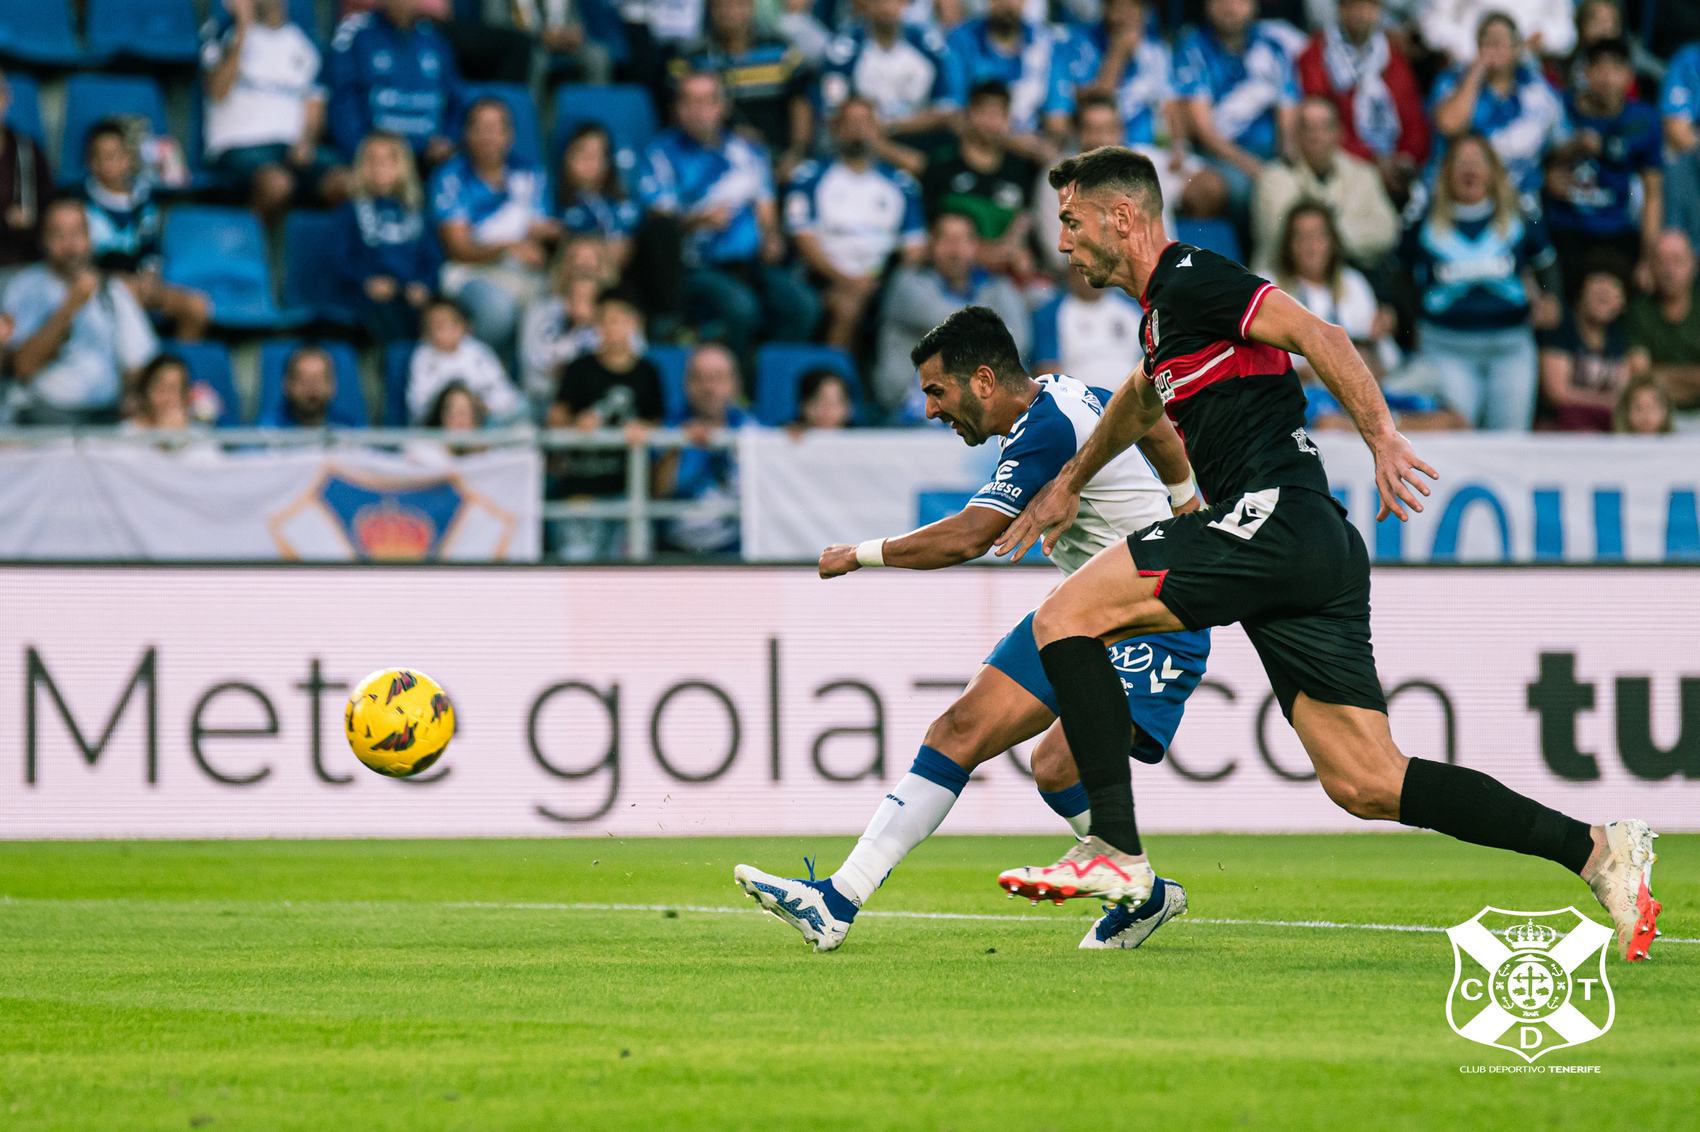 Crónica del CD Tenerife 1-1 FC Cartagena: "El Tenerife rescata un punto en la recta final"